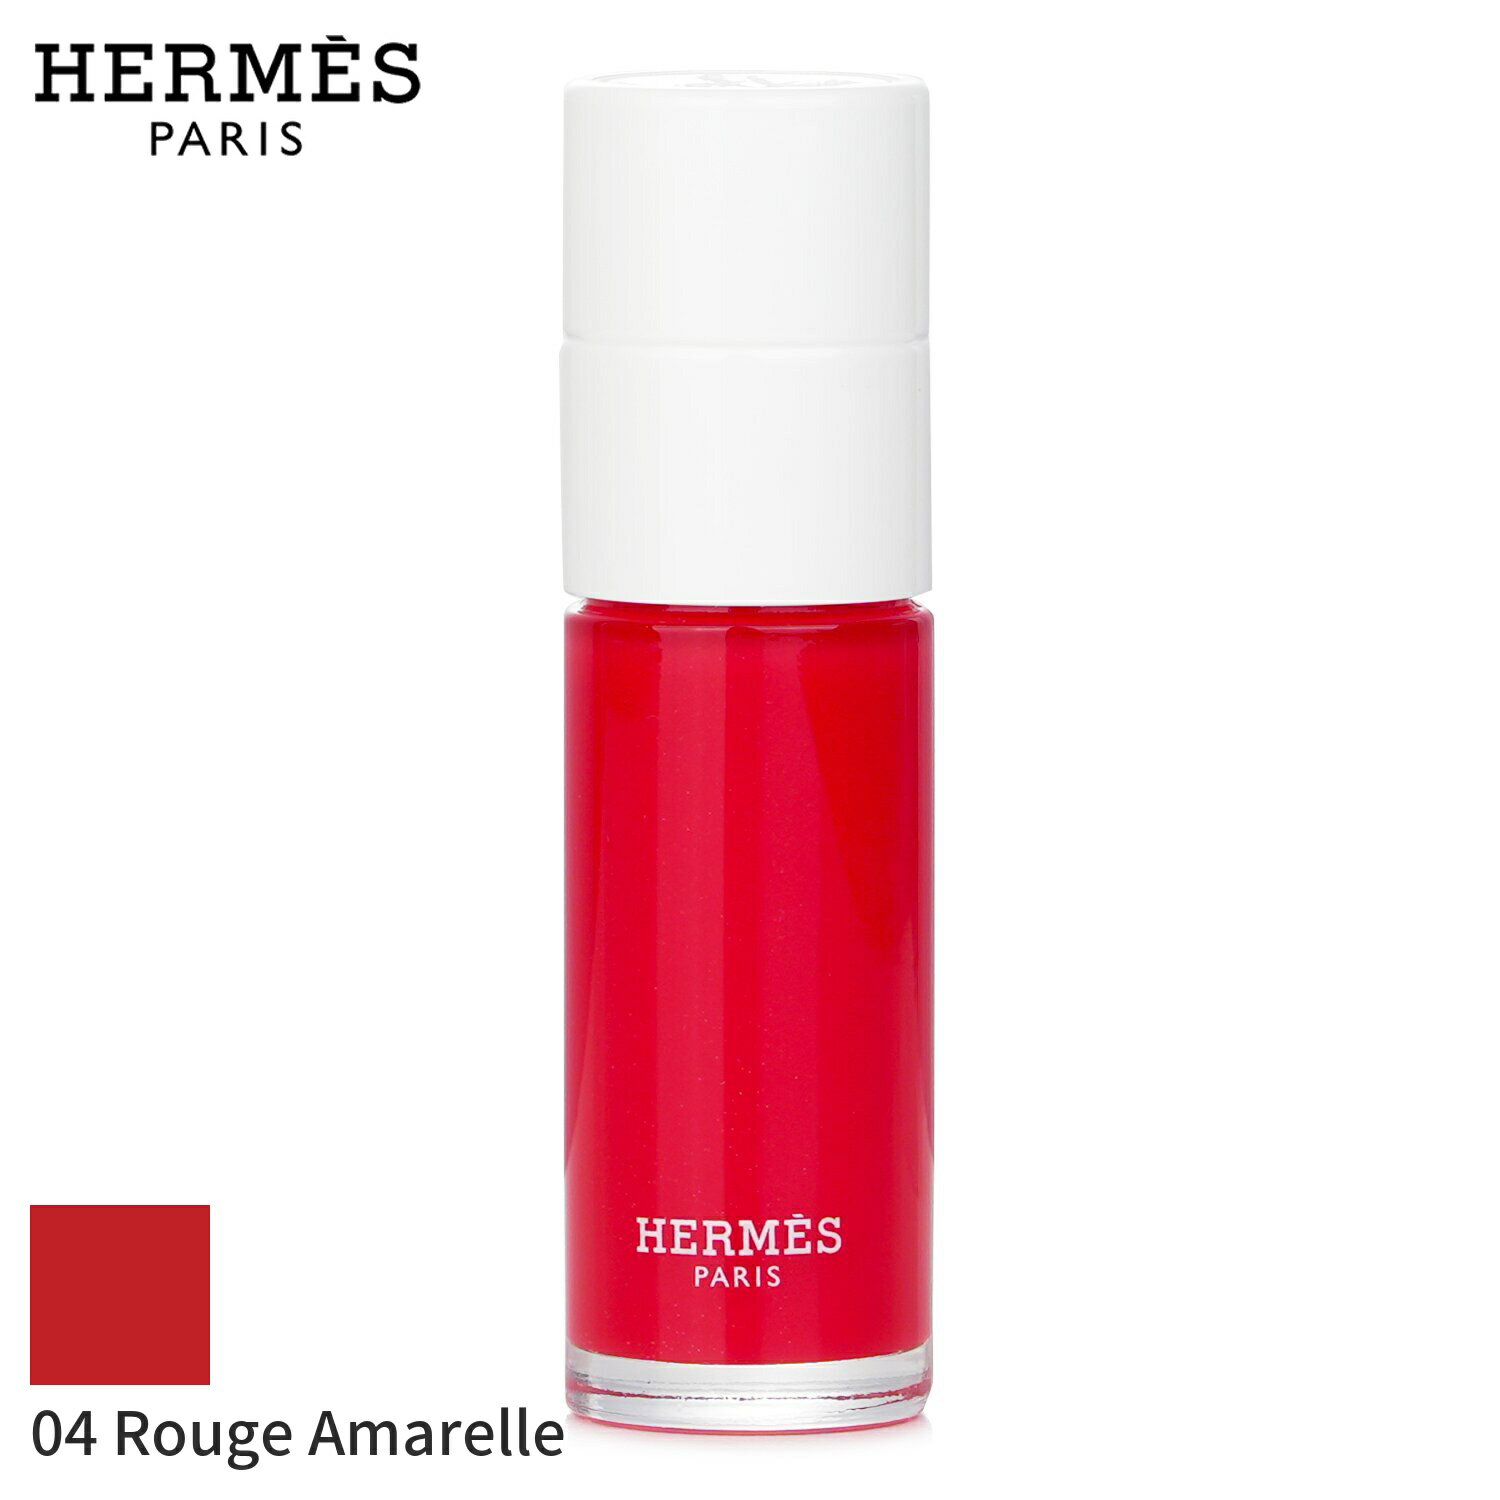 GX bvJ[iOpj Hermes g Hermesistible Infused Lip Care Oil - # 04 Rouge Amarelle 8.5ml CNAbv bv ɂ ̓ v[g Mtg 2023 lC uh RX